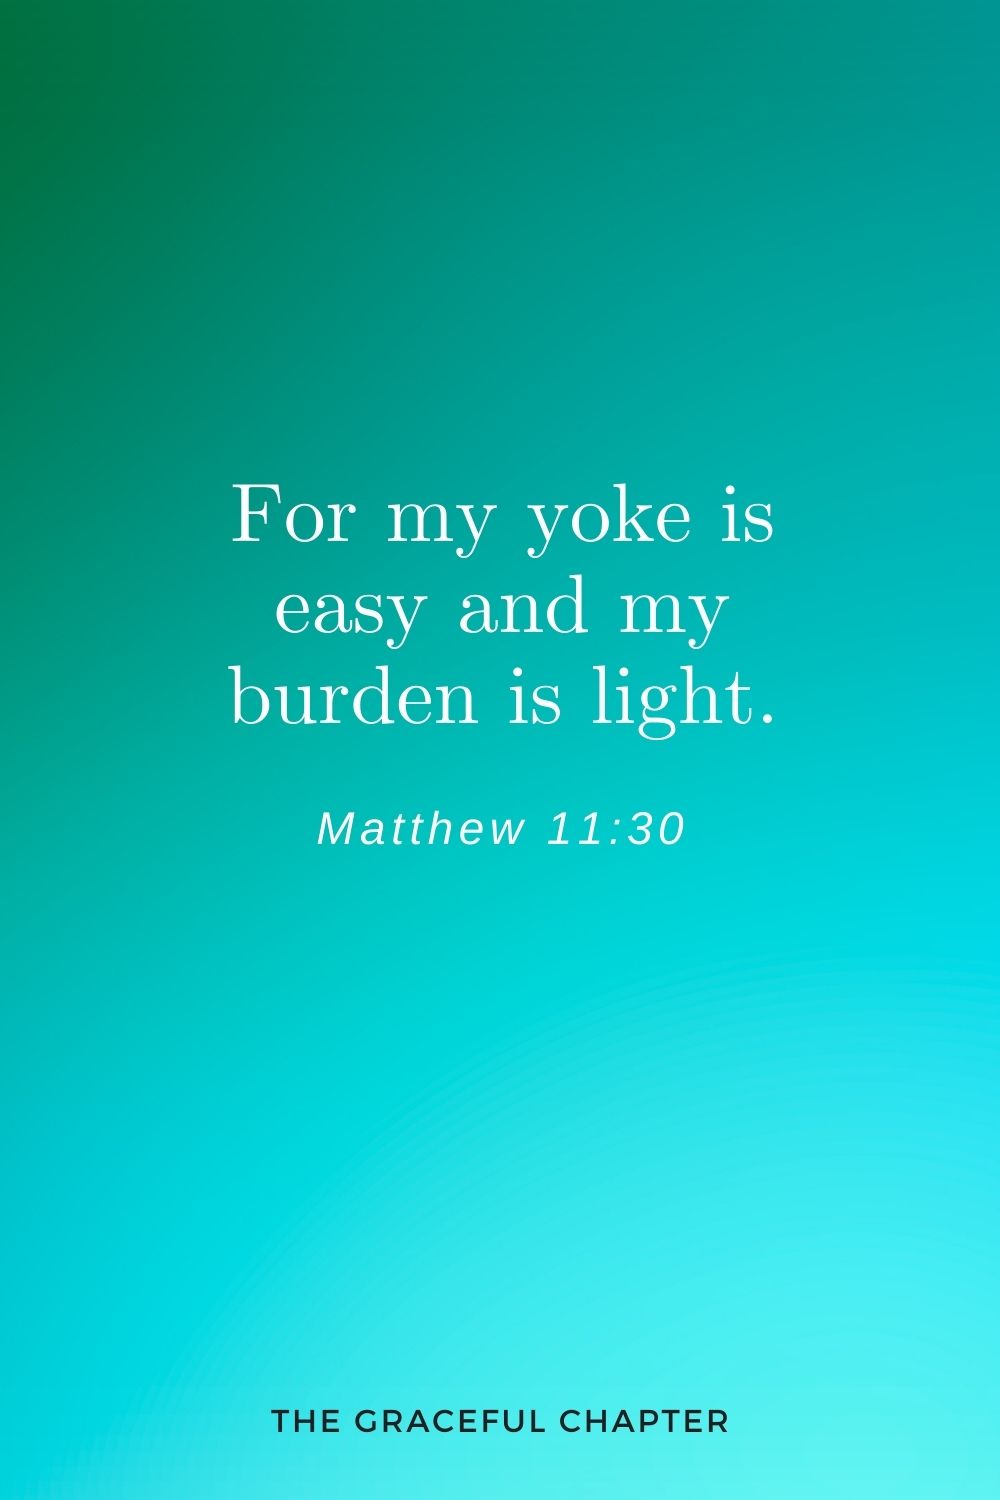 For my yoke is easy and my burden is light. Matthew 11:30